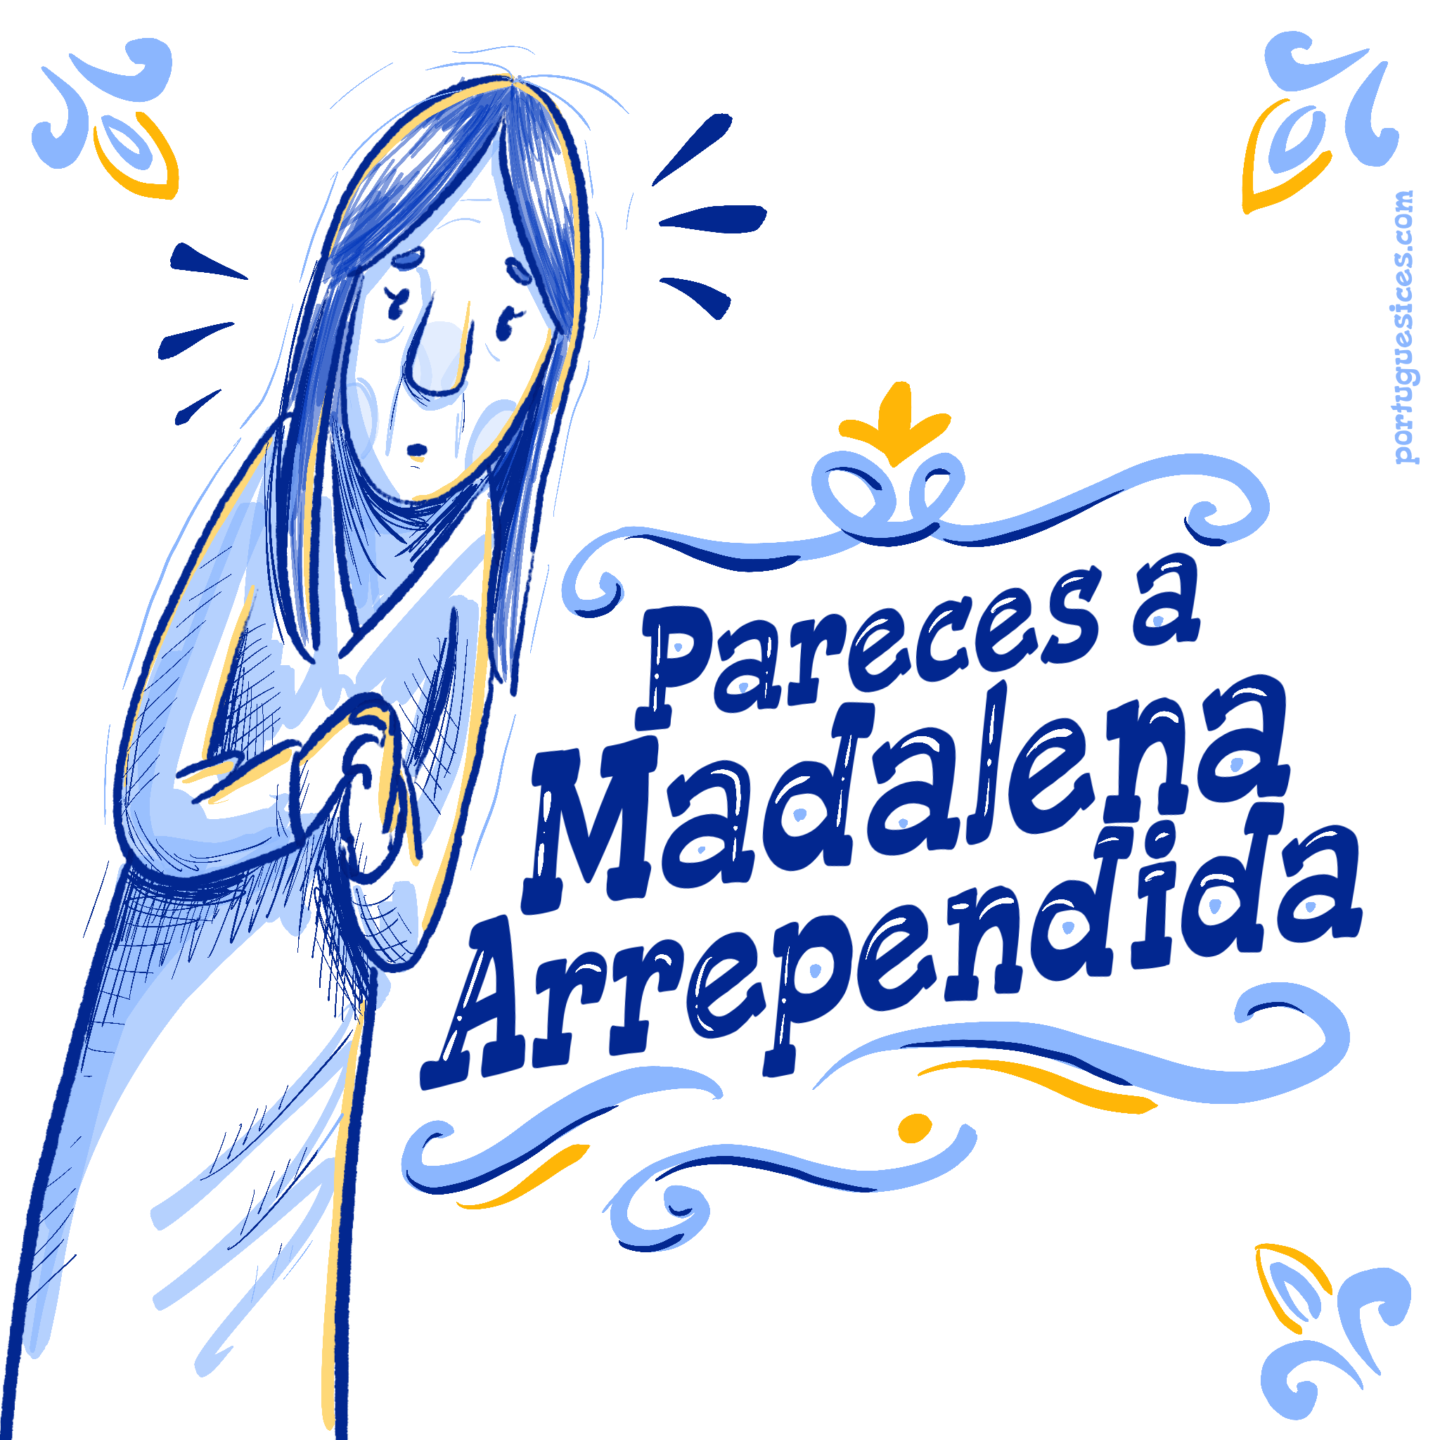 Madalena Arrependida